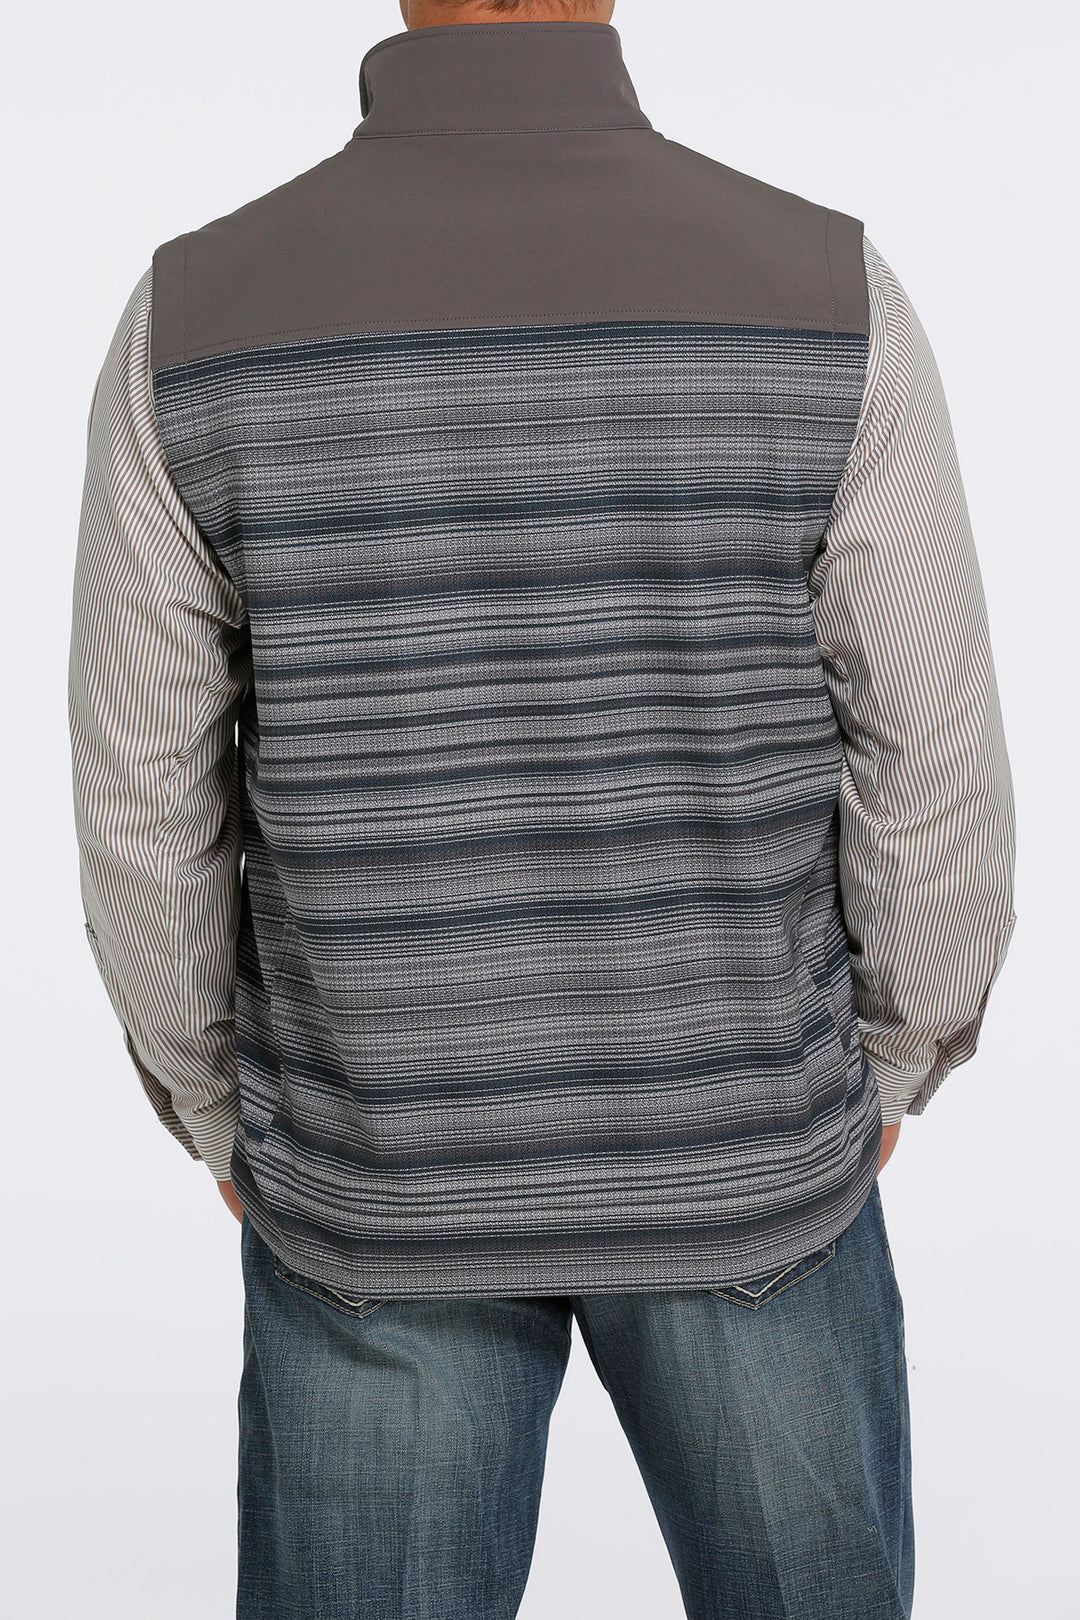 Back View Cinch | Grey Striped Bonded Vest